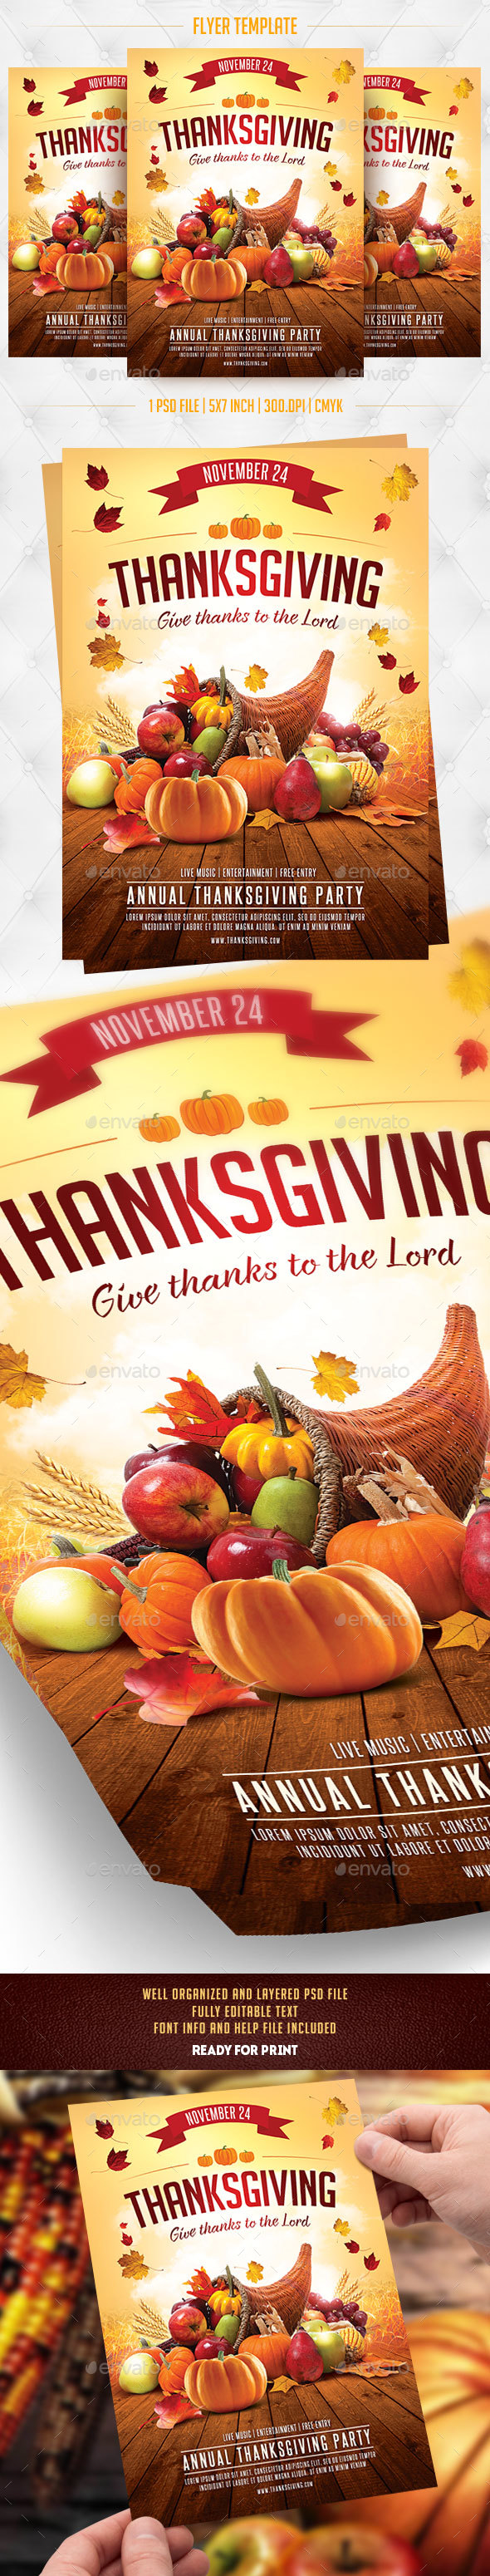 Thanksgiving Day Flyer Template v3